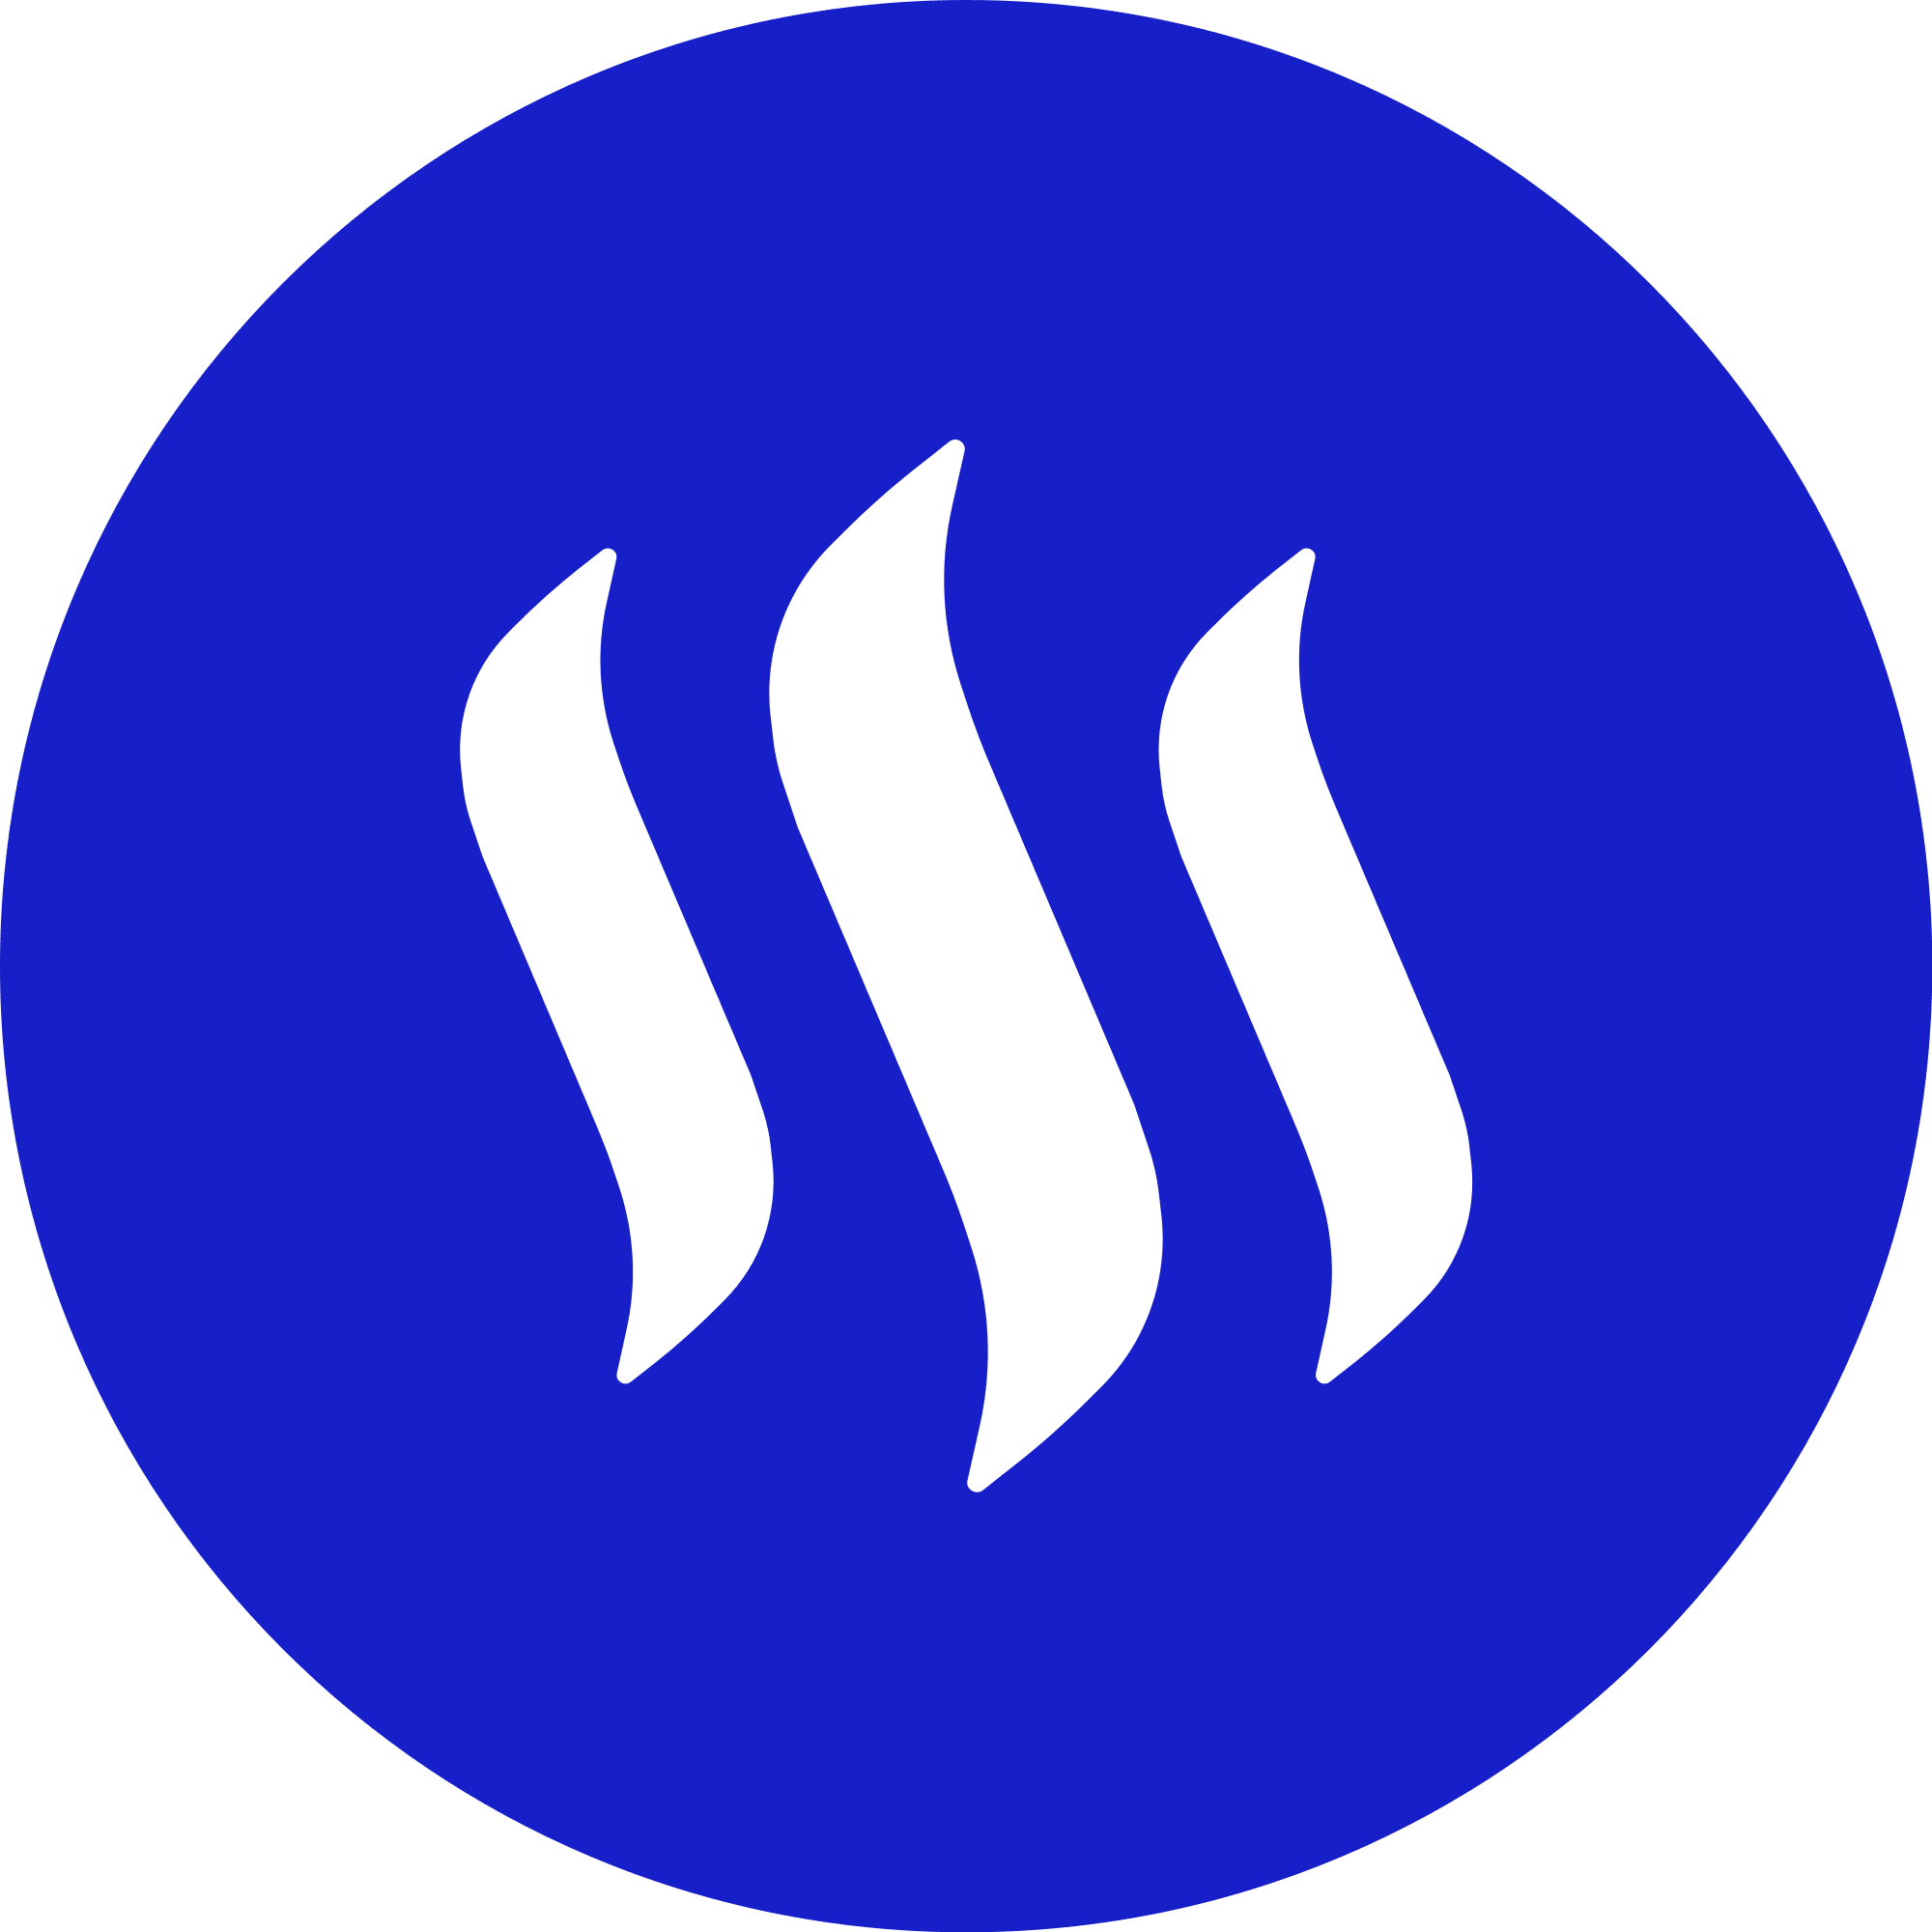 Steem logo in png format